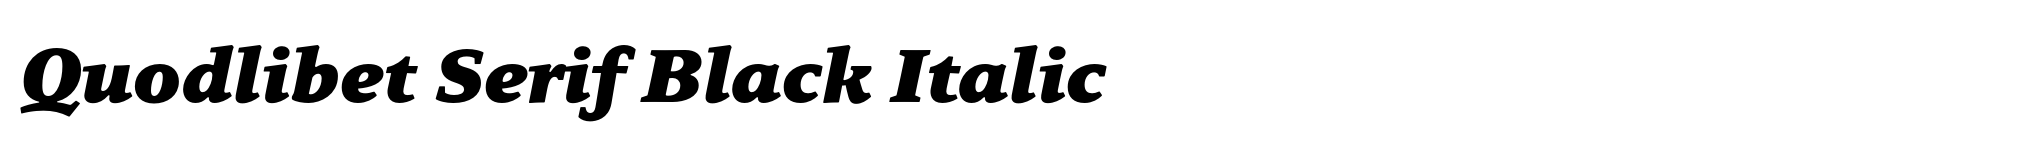 Quodlibet Serif Black Italic image